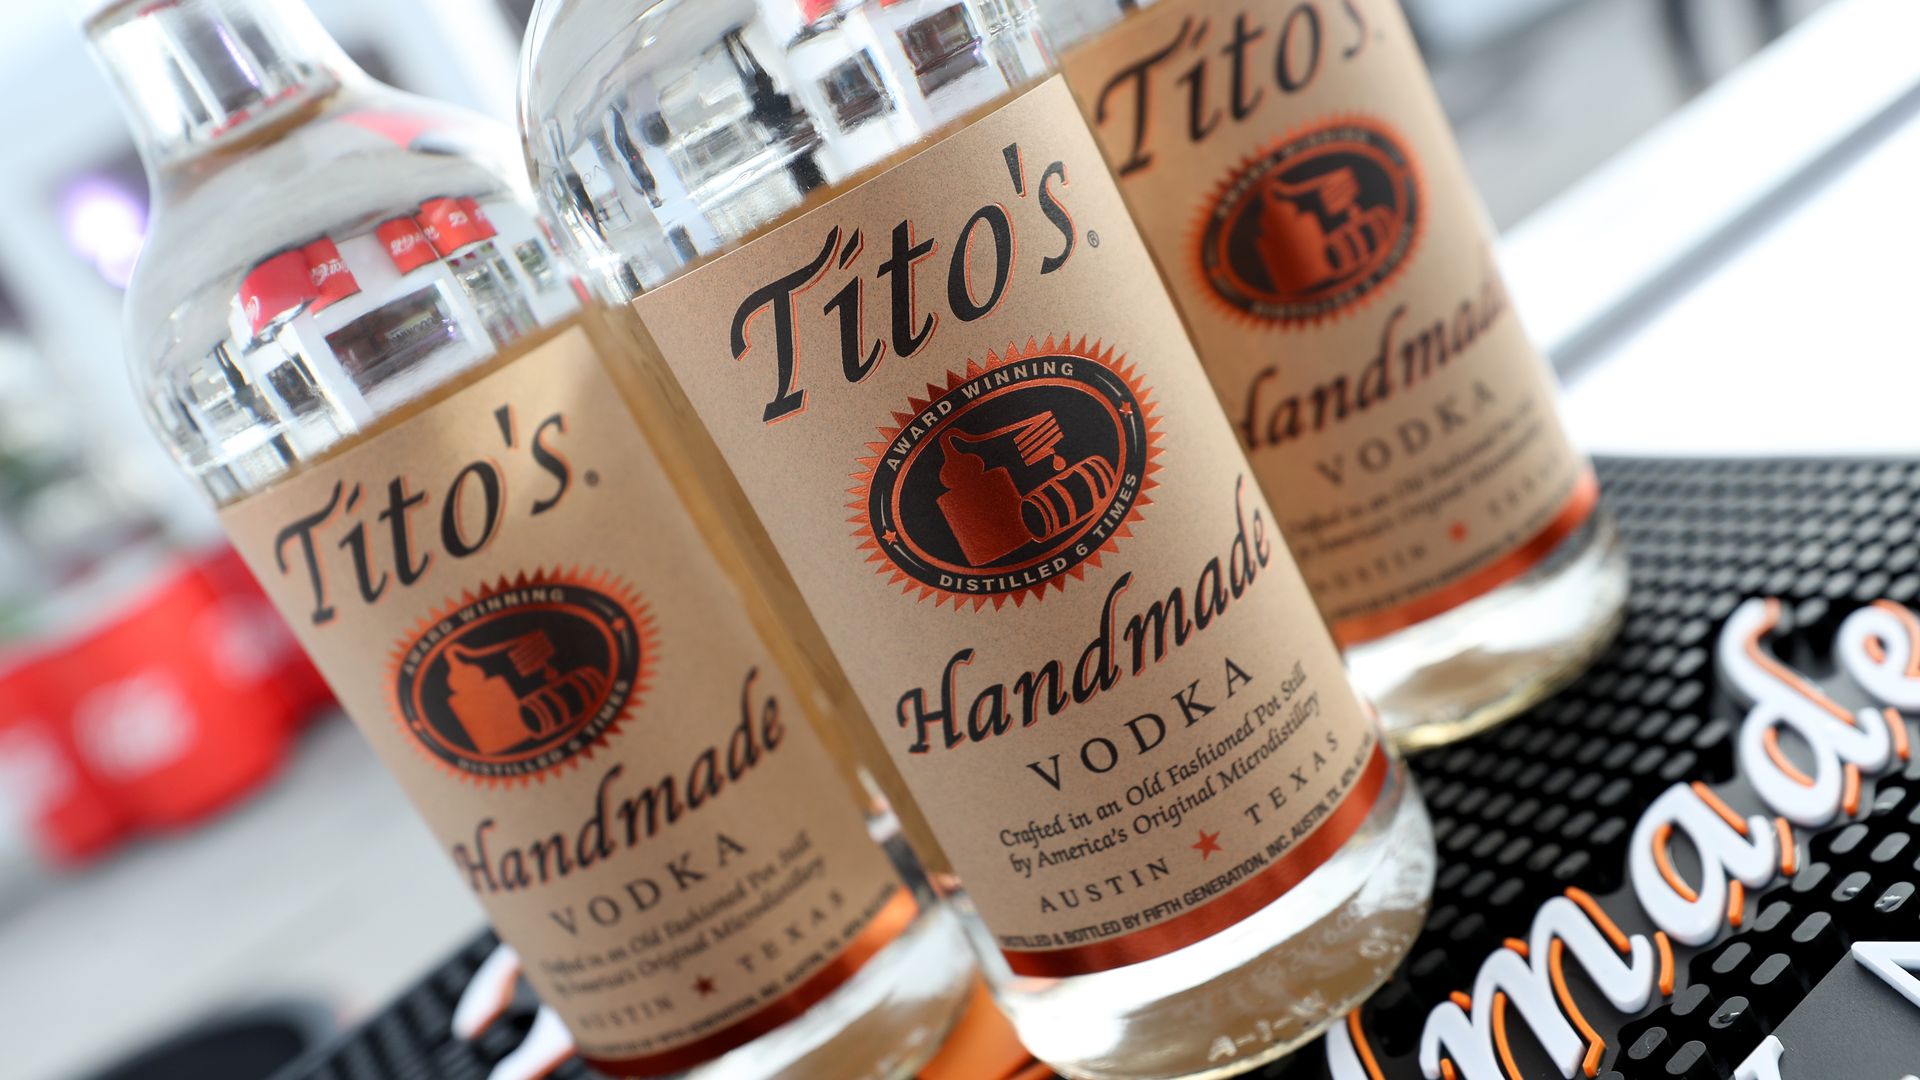 The bottles of tito's vodka 